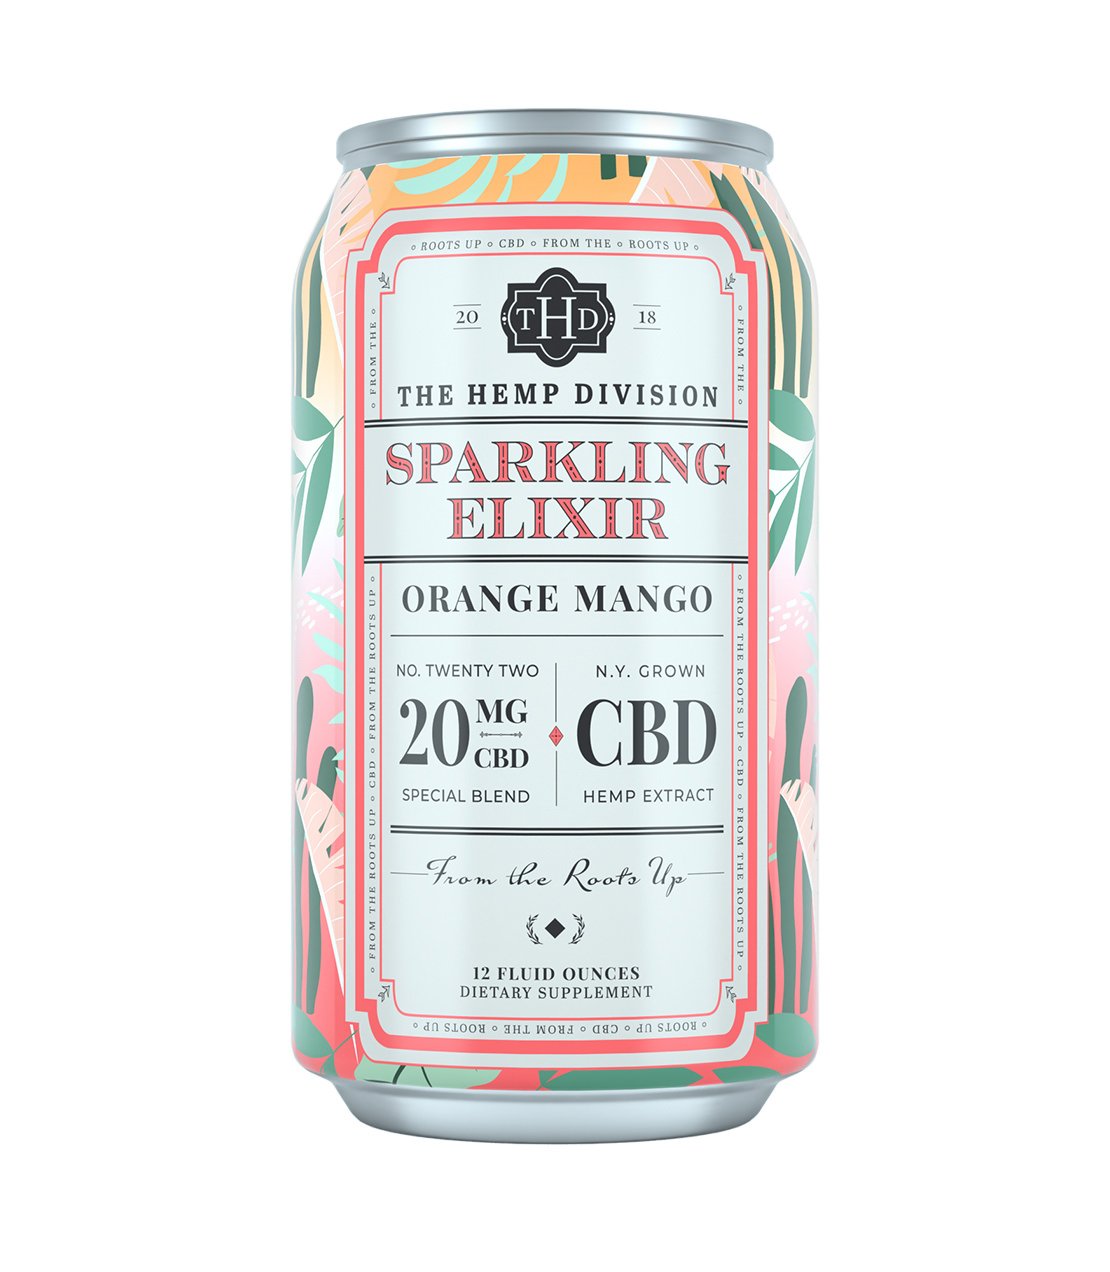 Sparkling Elixir - 20 MG CBD - Orange Mango 12 oz. Can - Harney & Sons Fine Teas